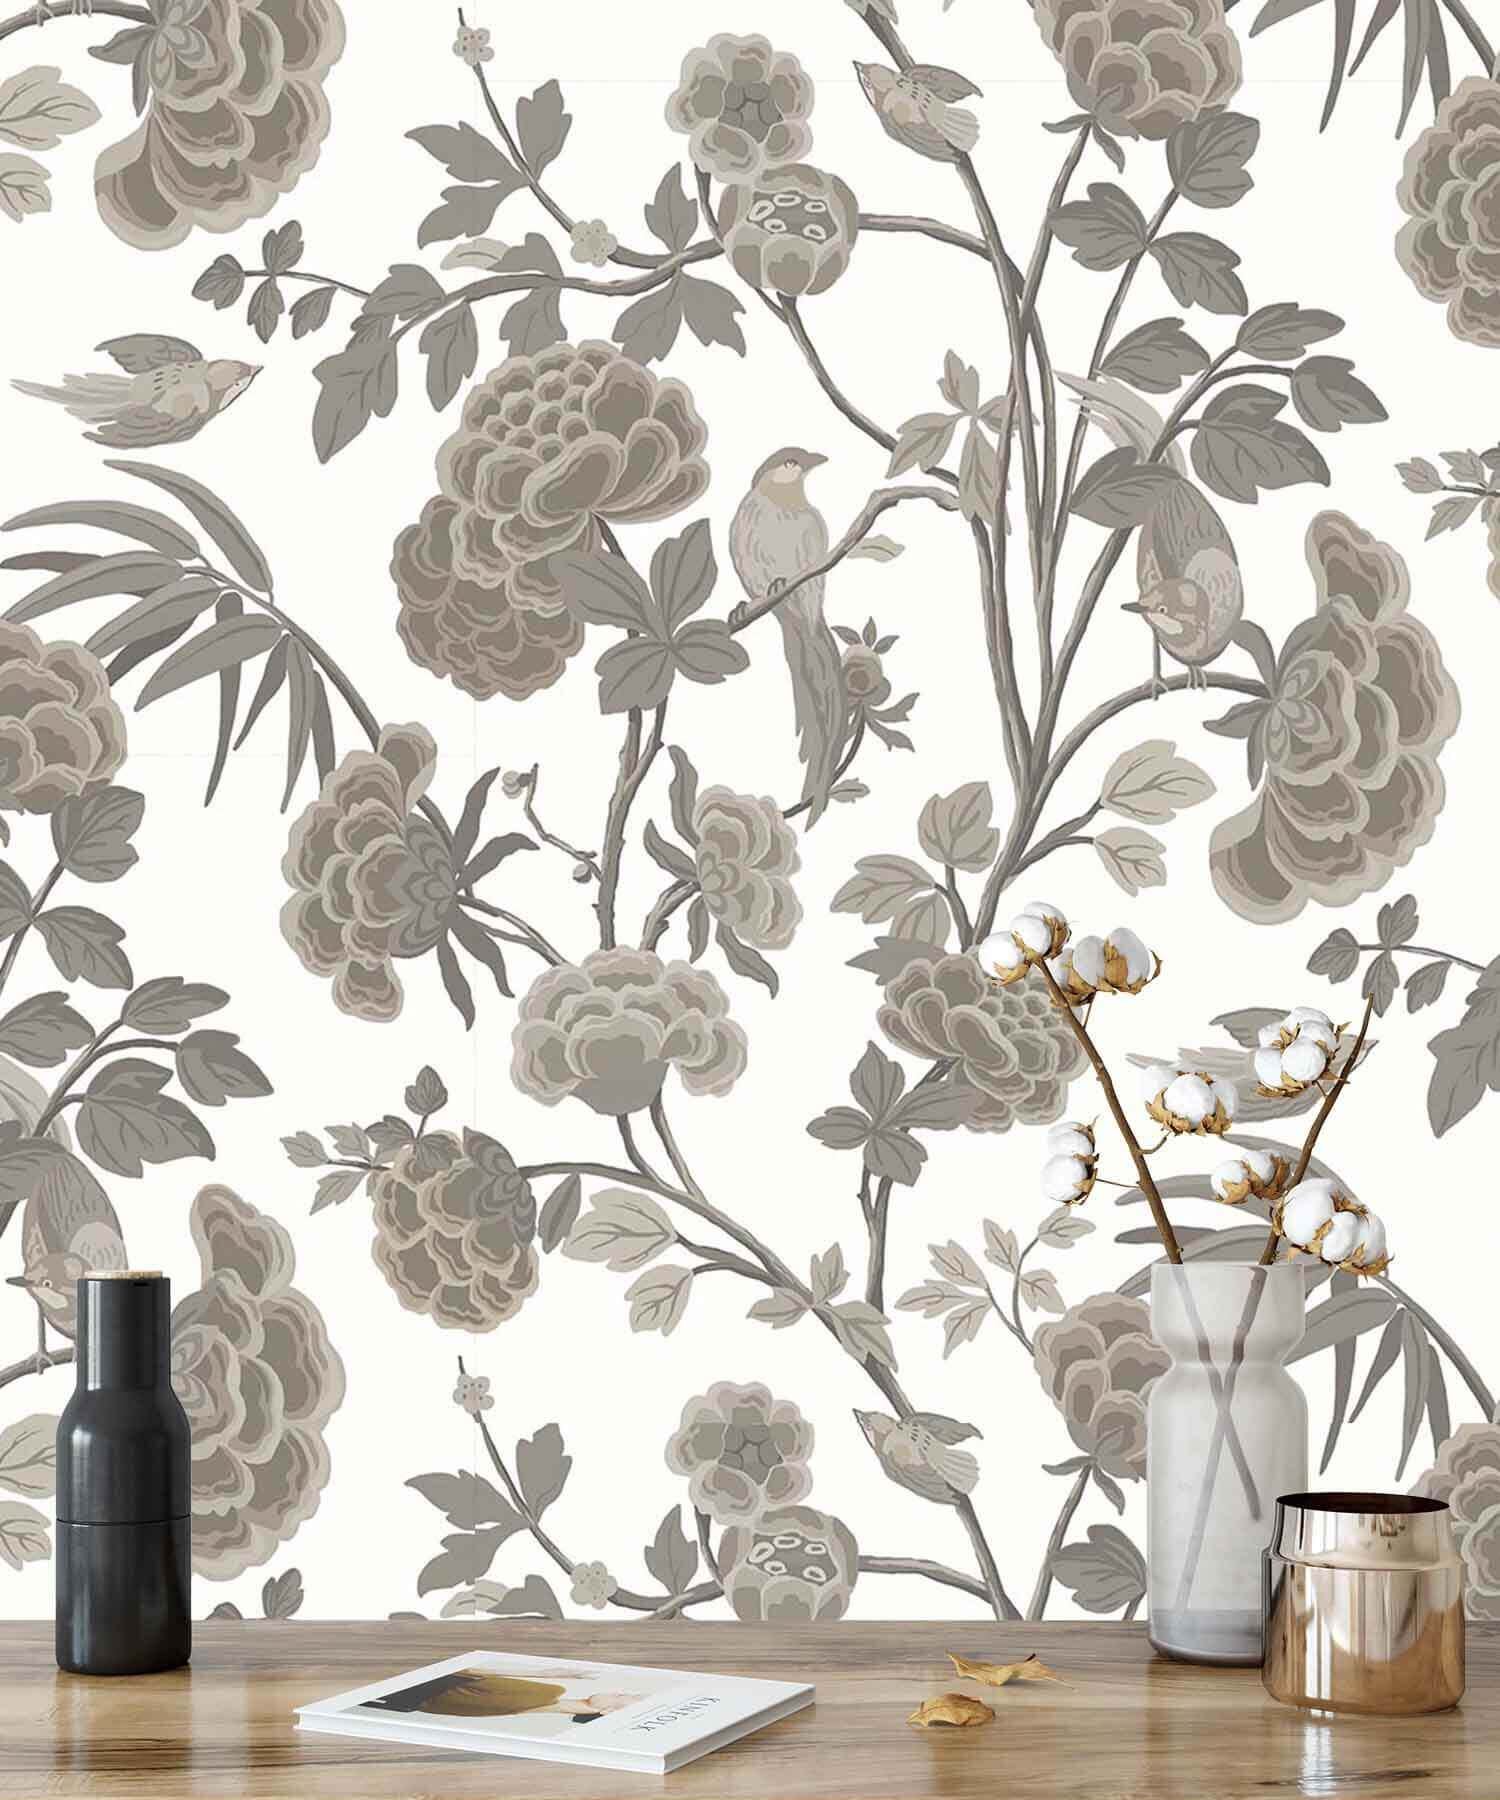 Floral wallpaper wallpro